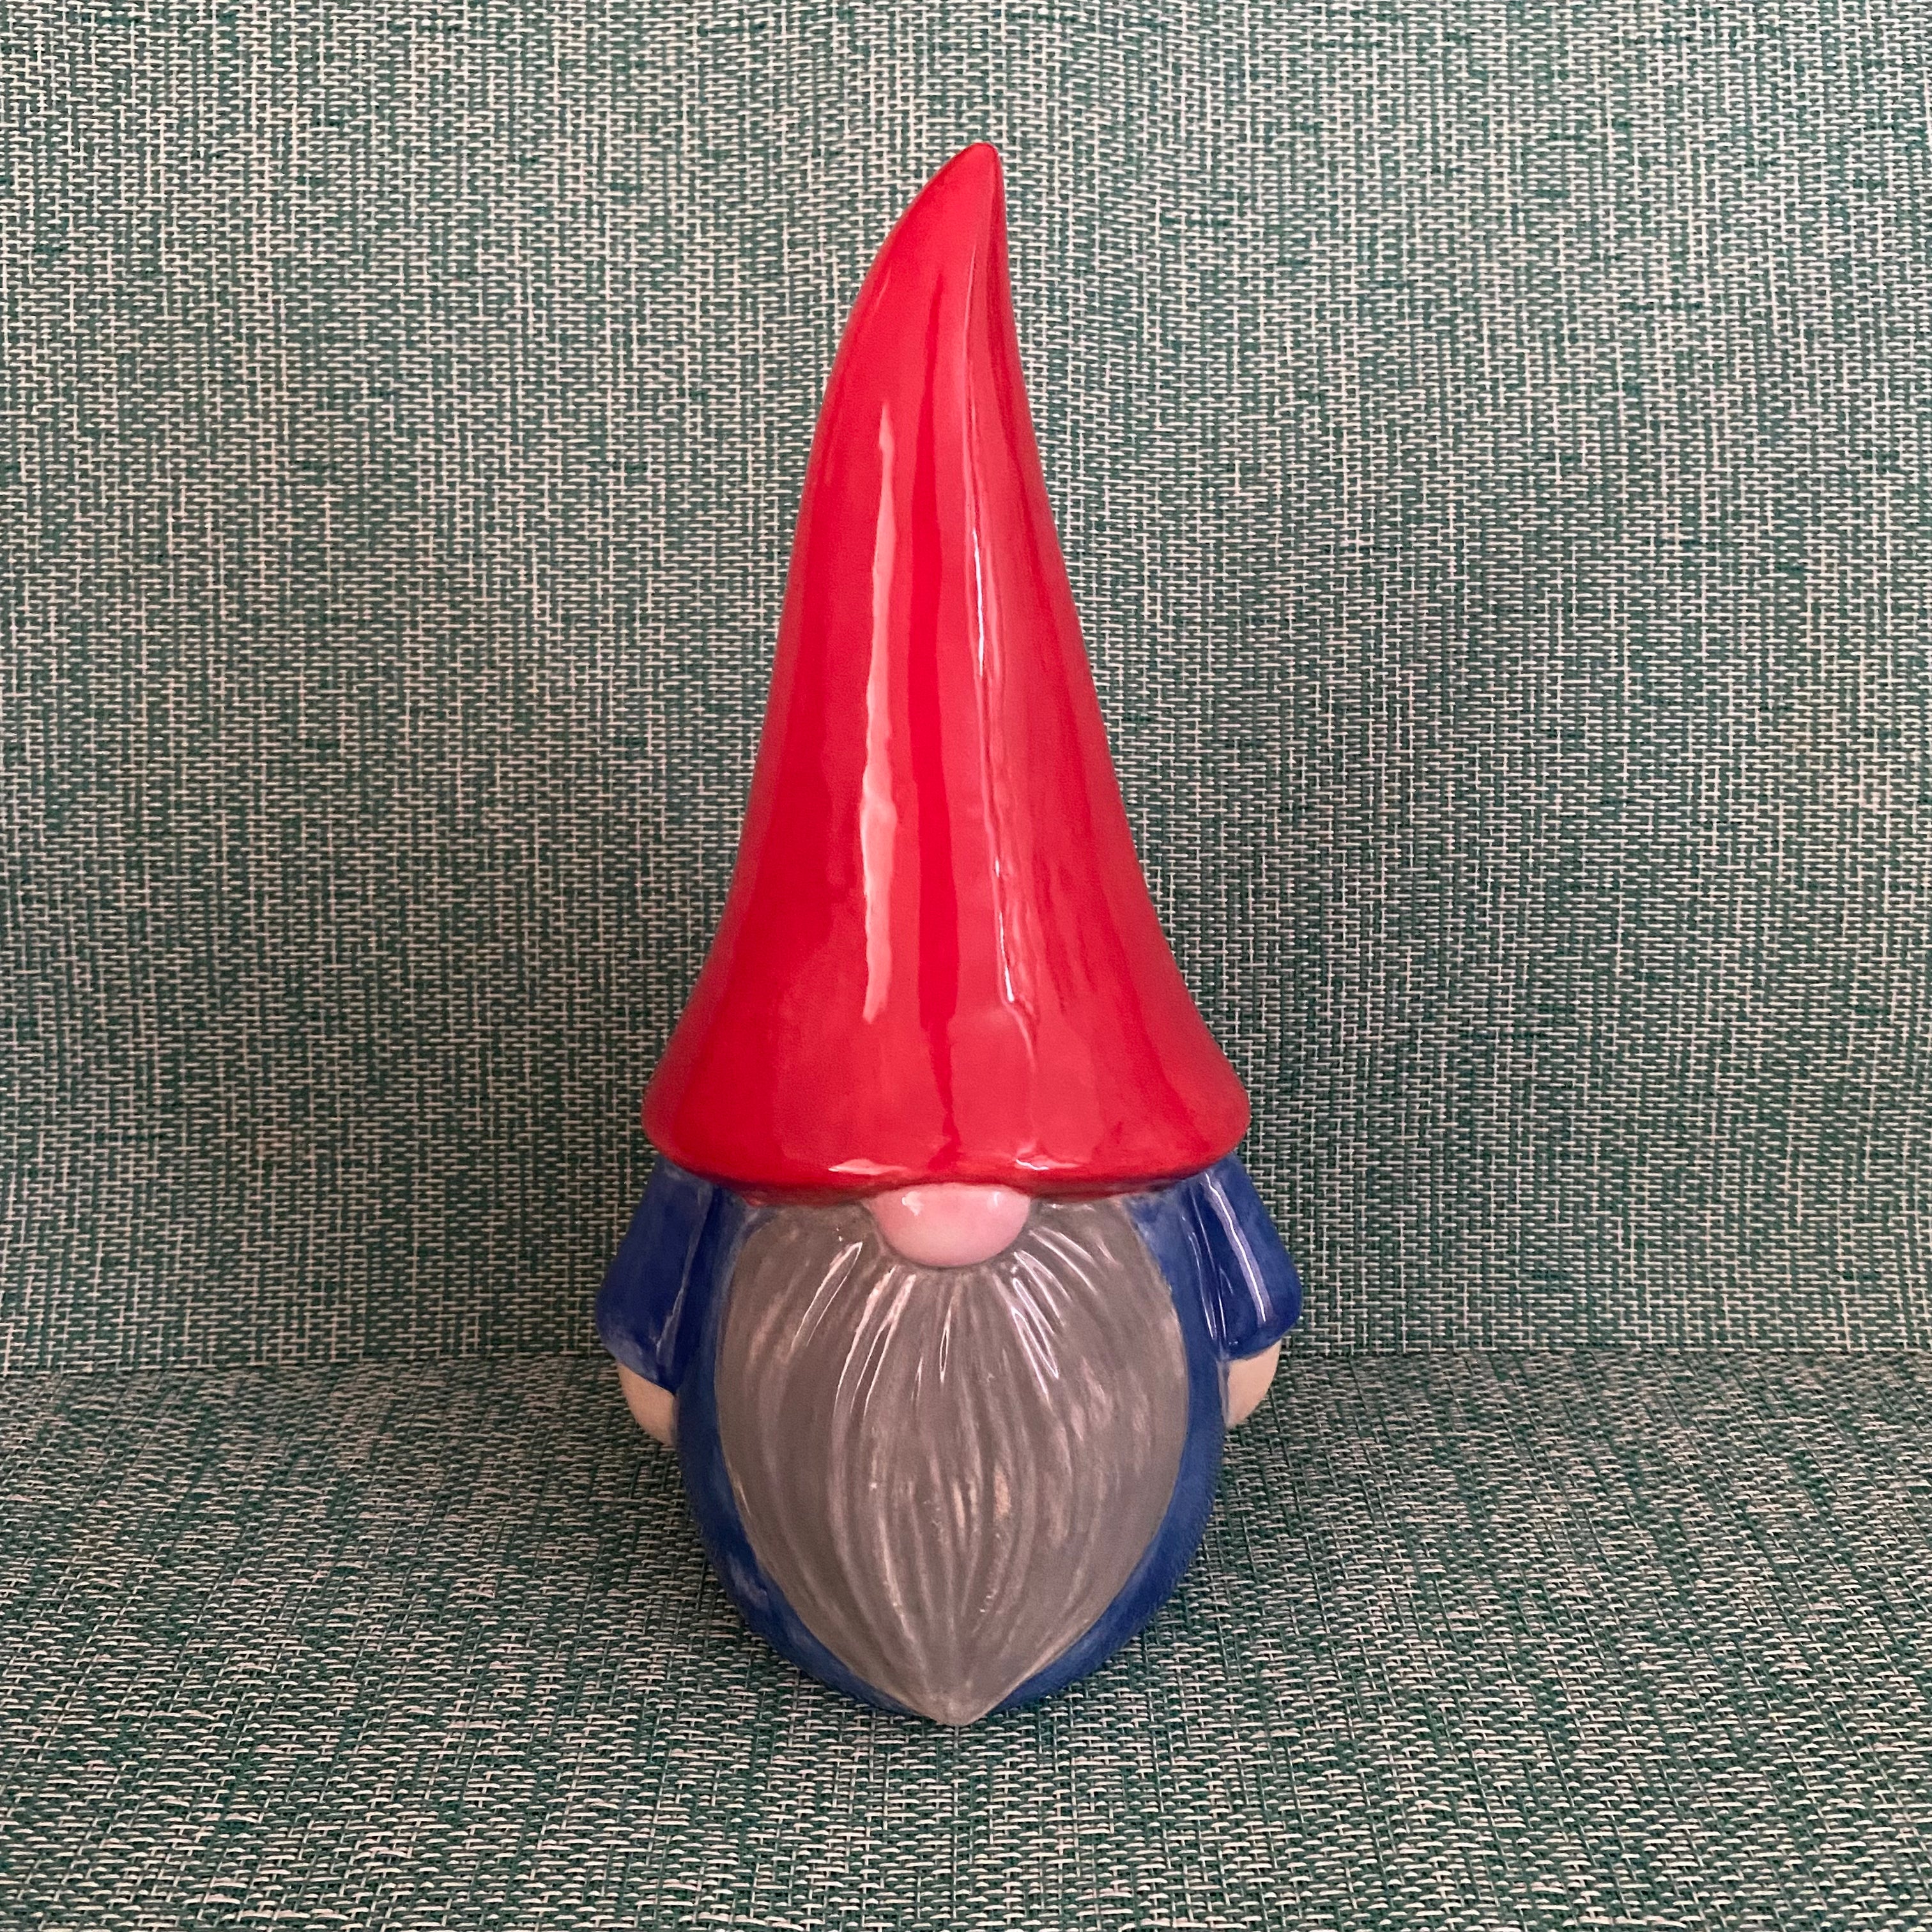 Mr Gnome - PaintPott